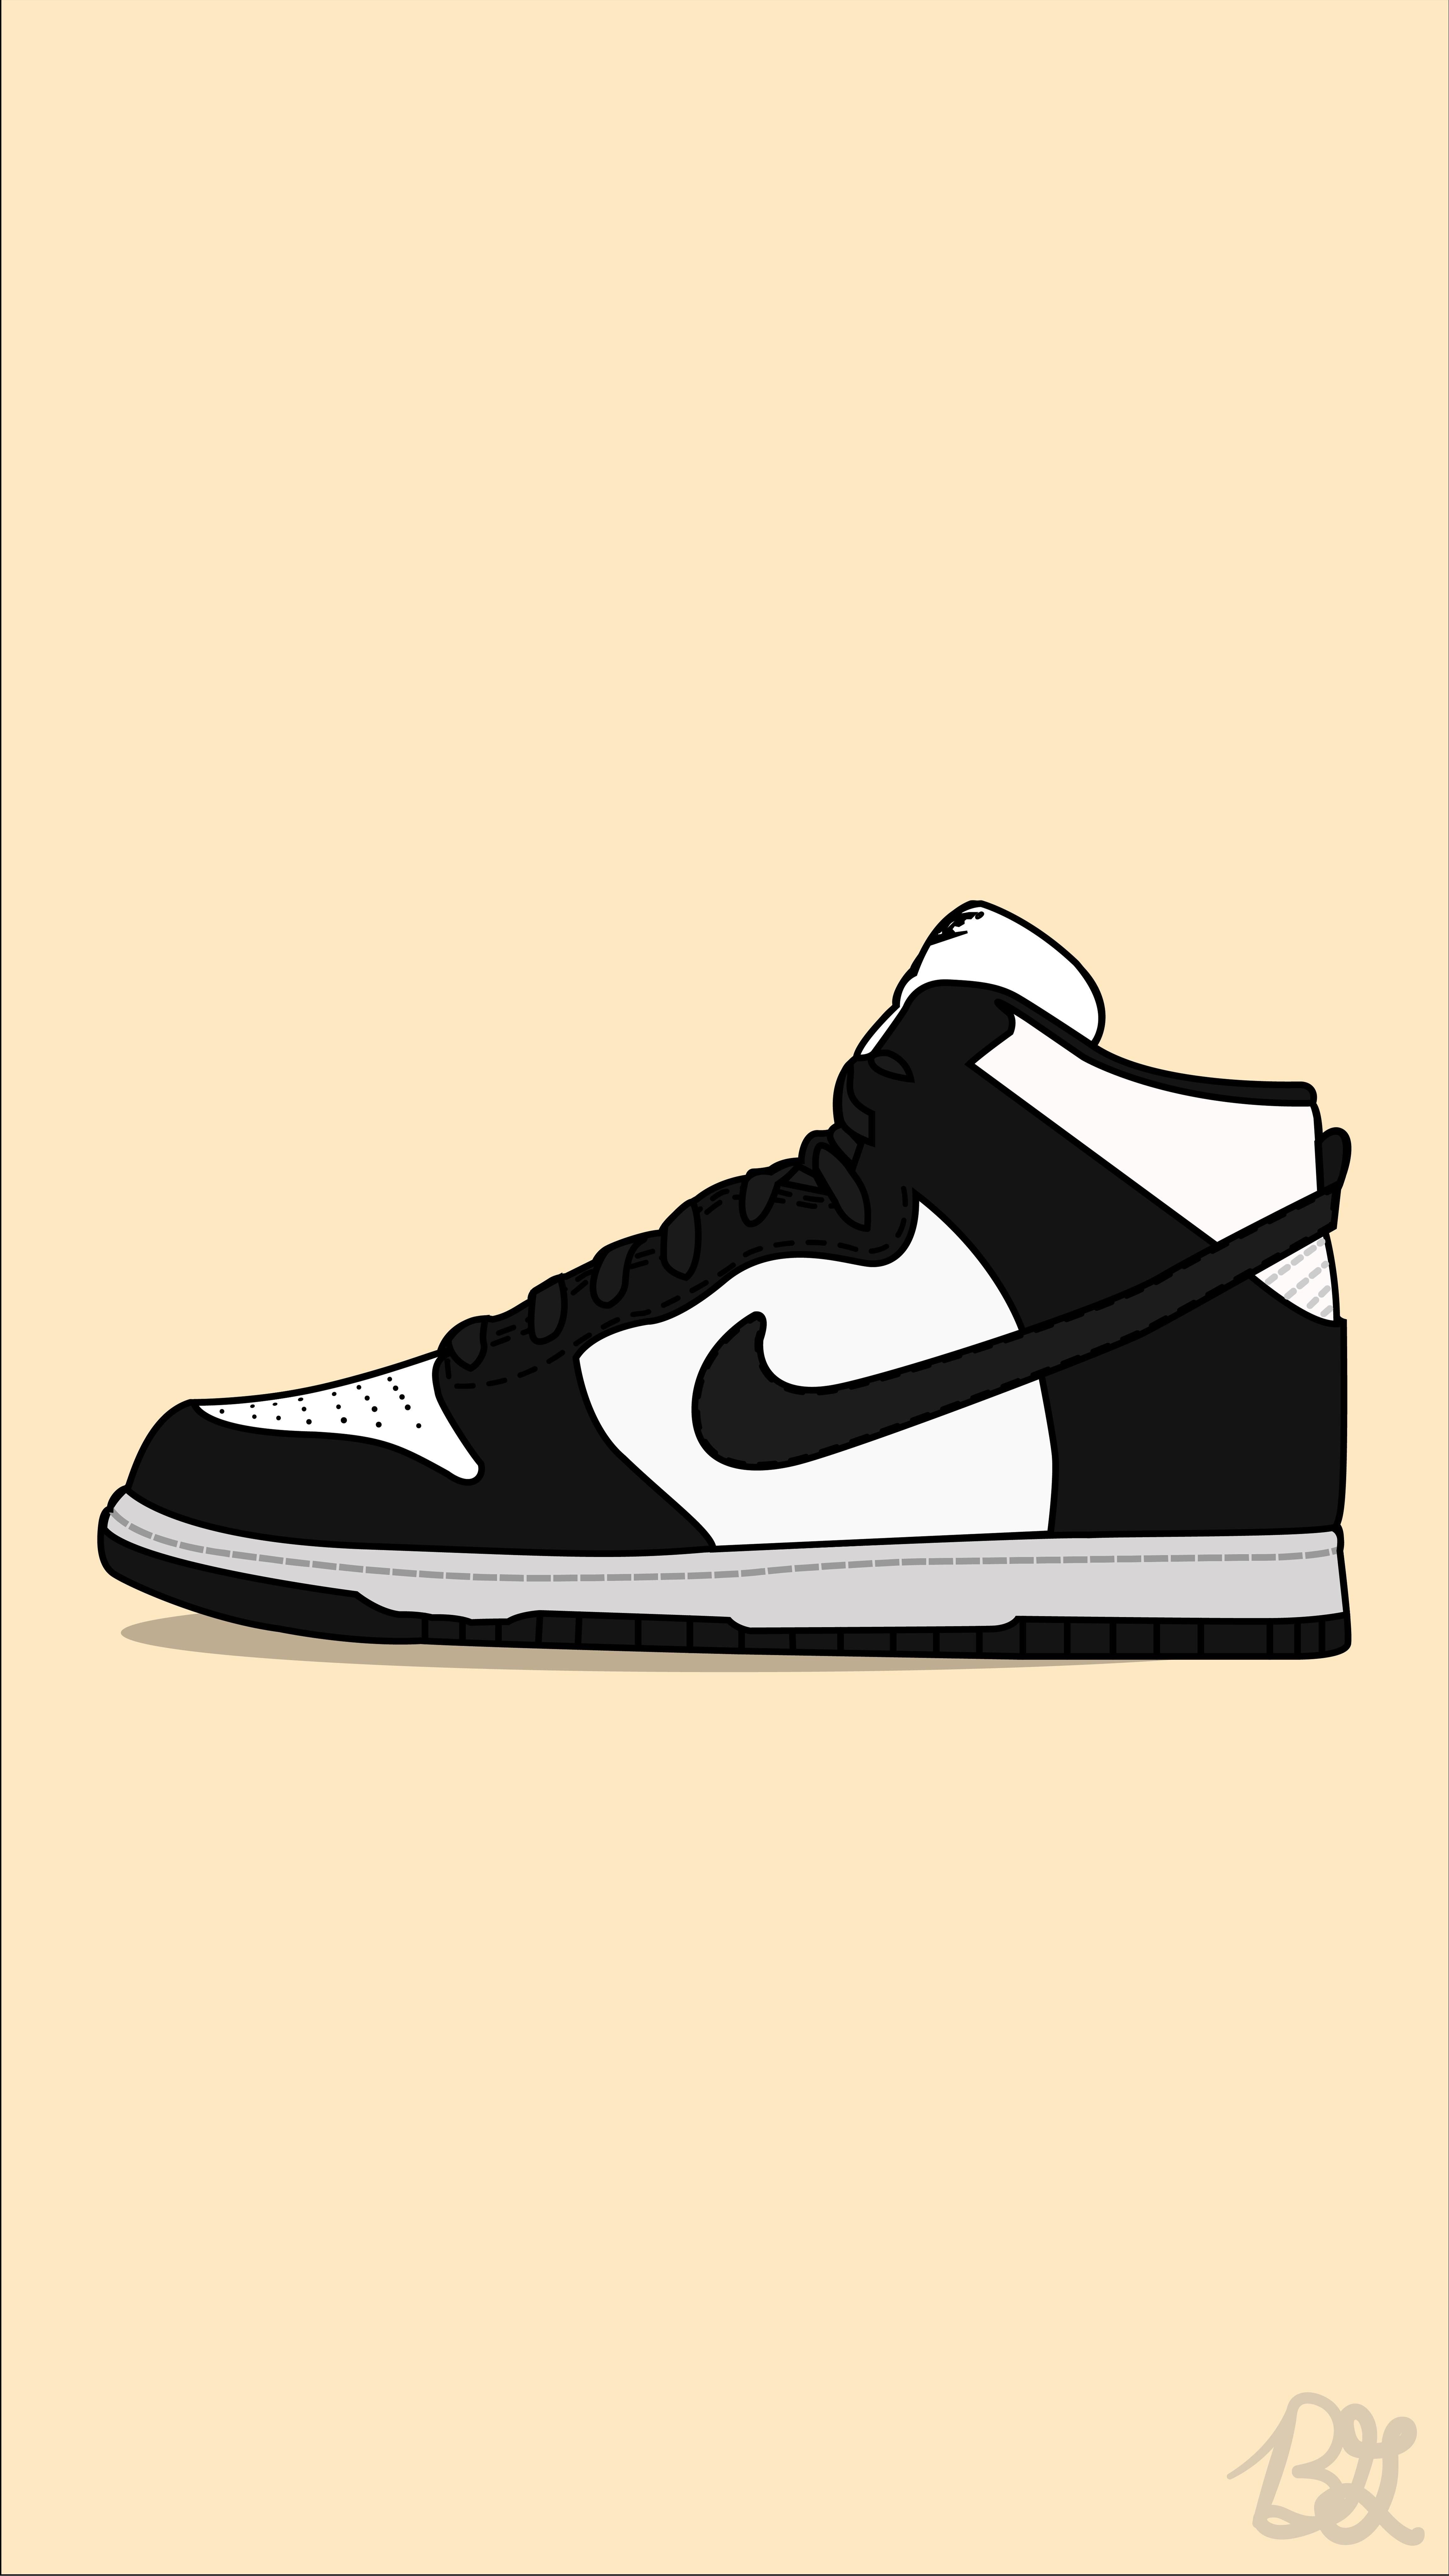 1080p Phone wallpaper of Nike Dunk. Shoes wallpaper, Sneakers illustration, Nike